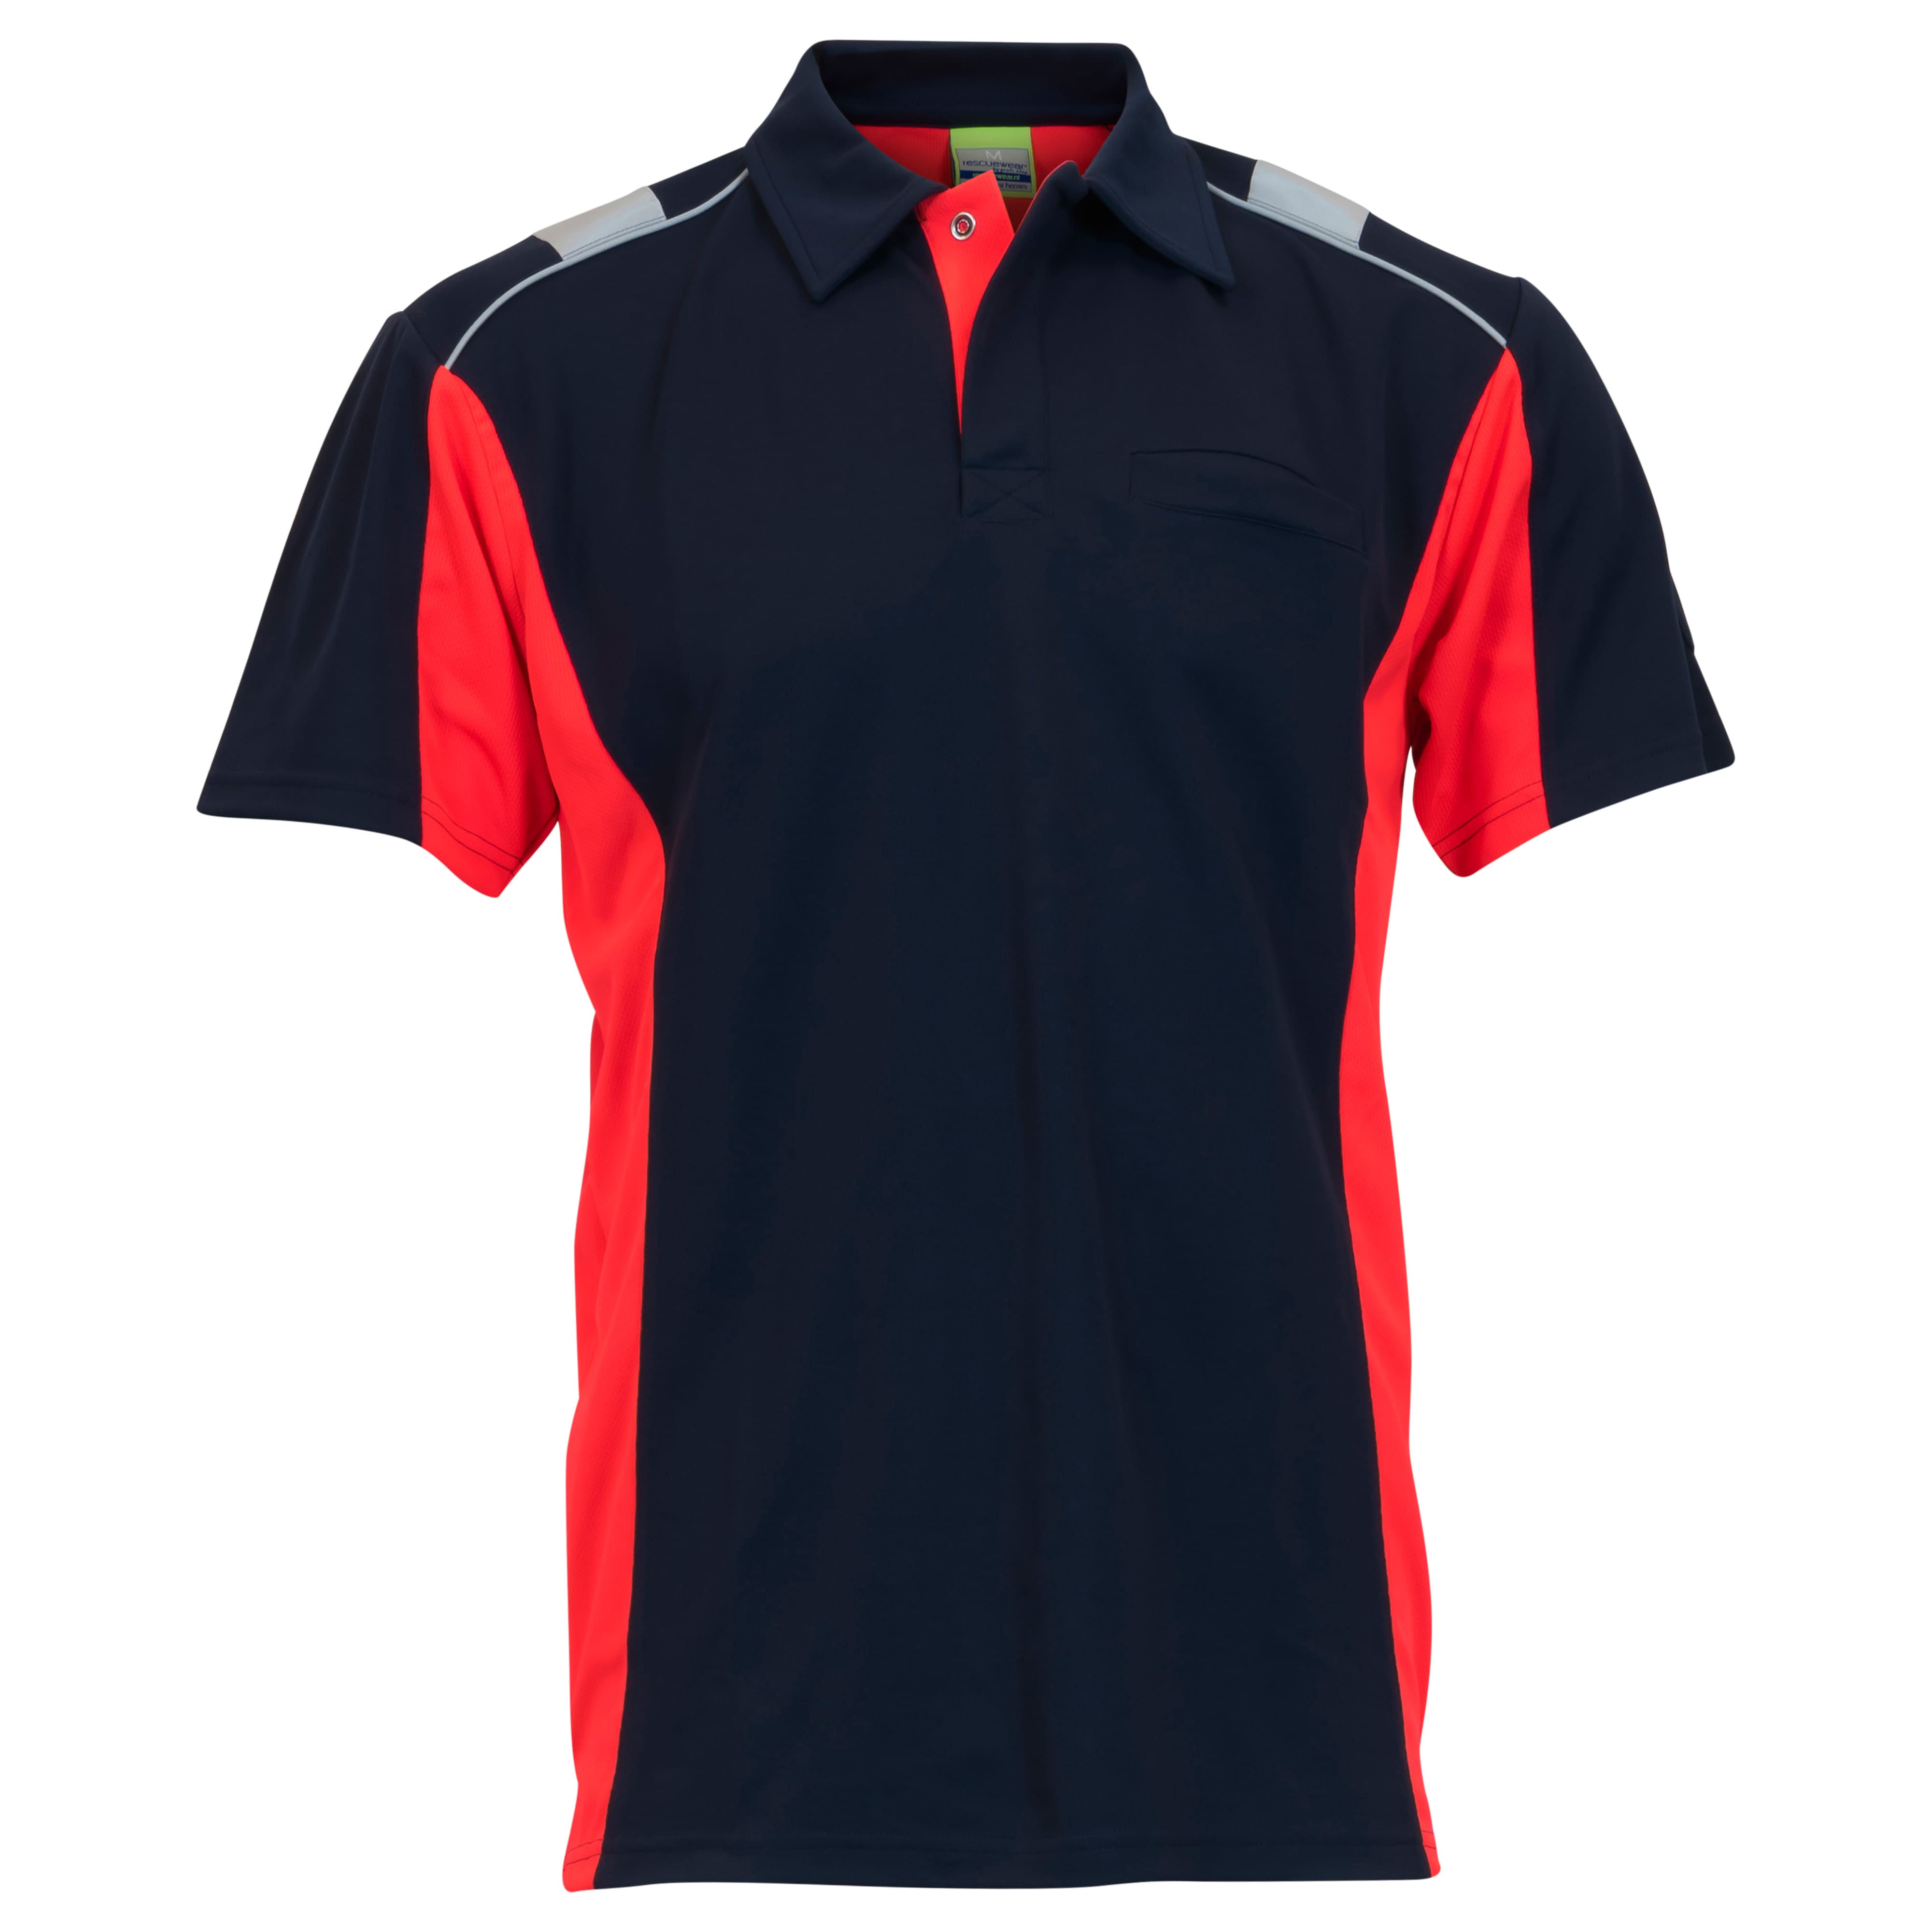 Rescuewear Poloshirt 33256 kurze Ärmel Dynamic Marineblau / Neon Rot